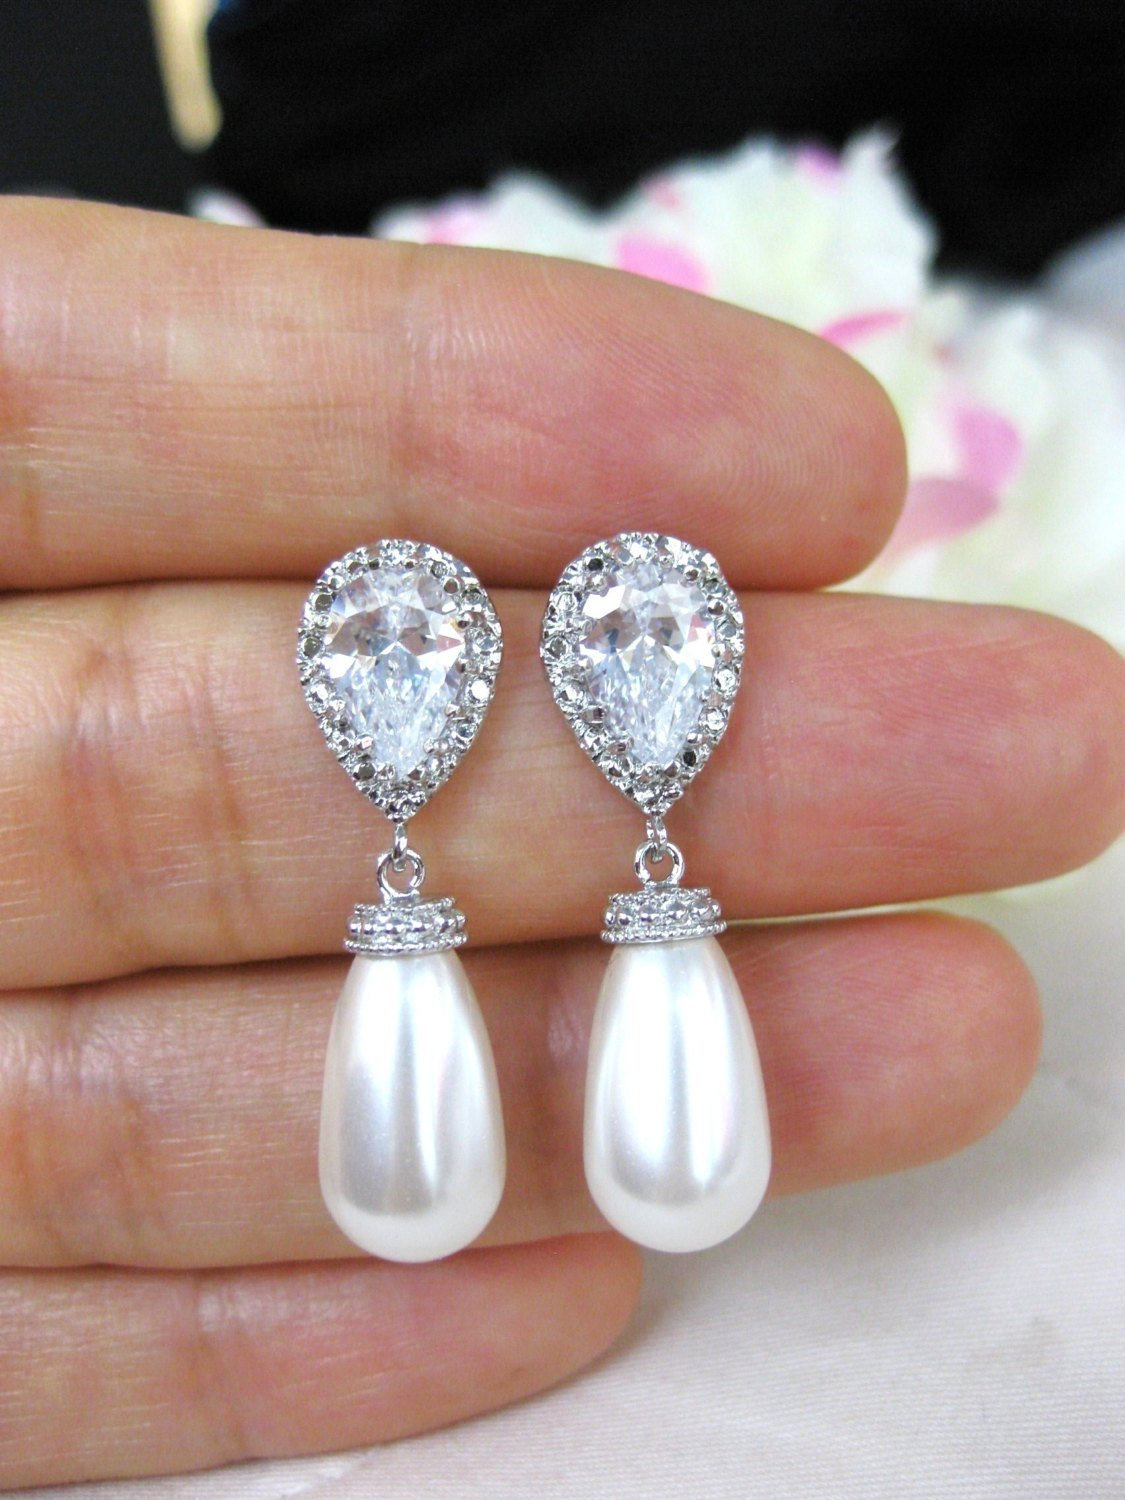 Bridal Pearl Earrings Wedding Jewelry Swarovski Teardrop Pearl Drop Dangle Earrings Cubic Zirconia Earrings Bridesmaid Gift (e070)